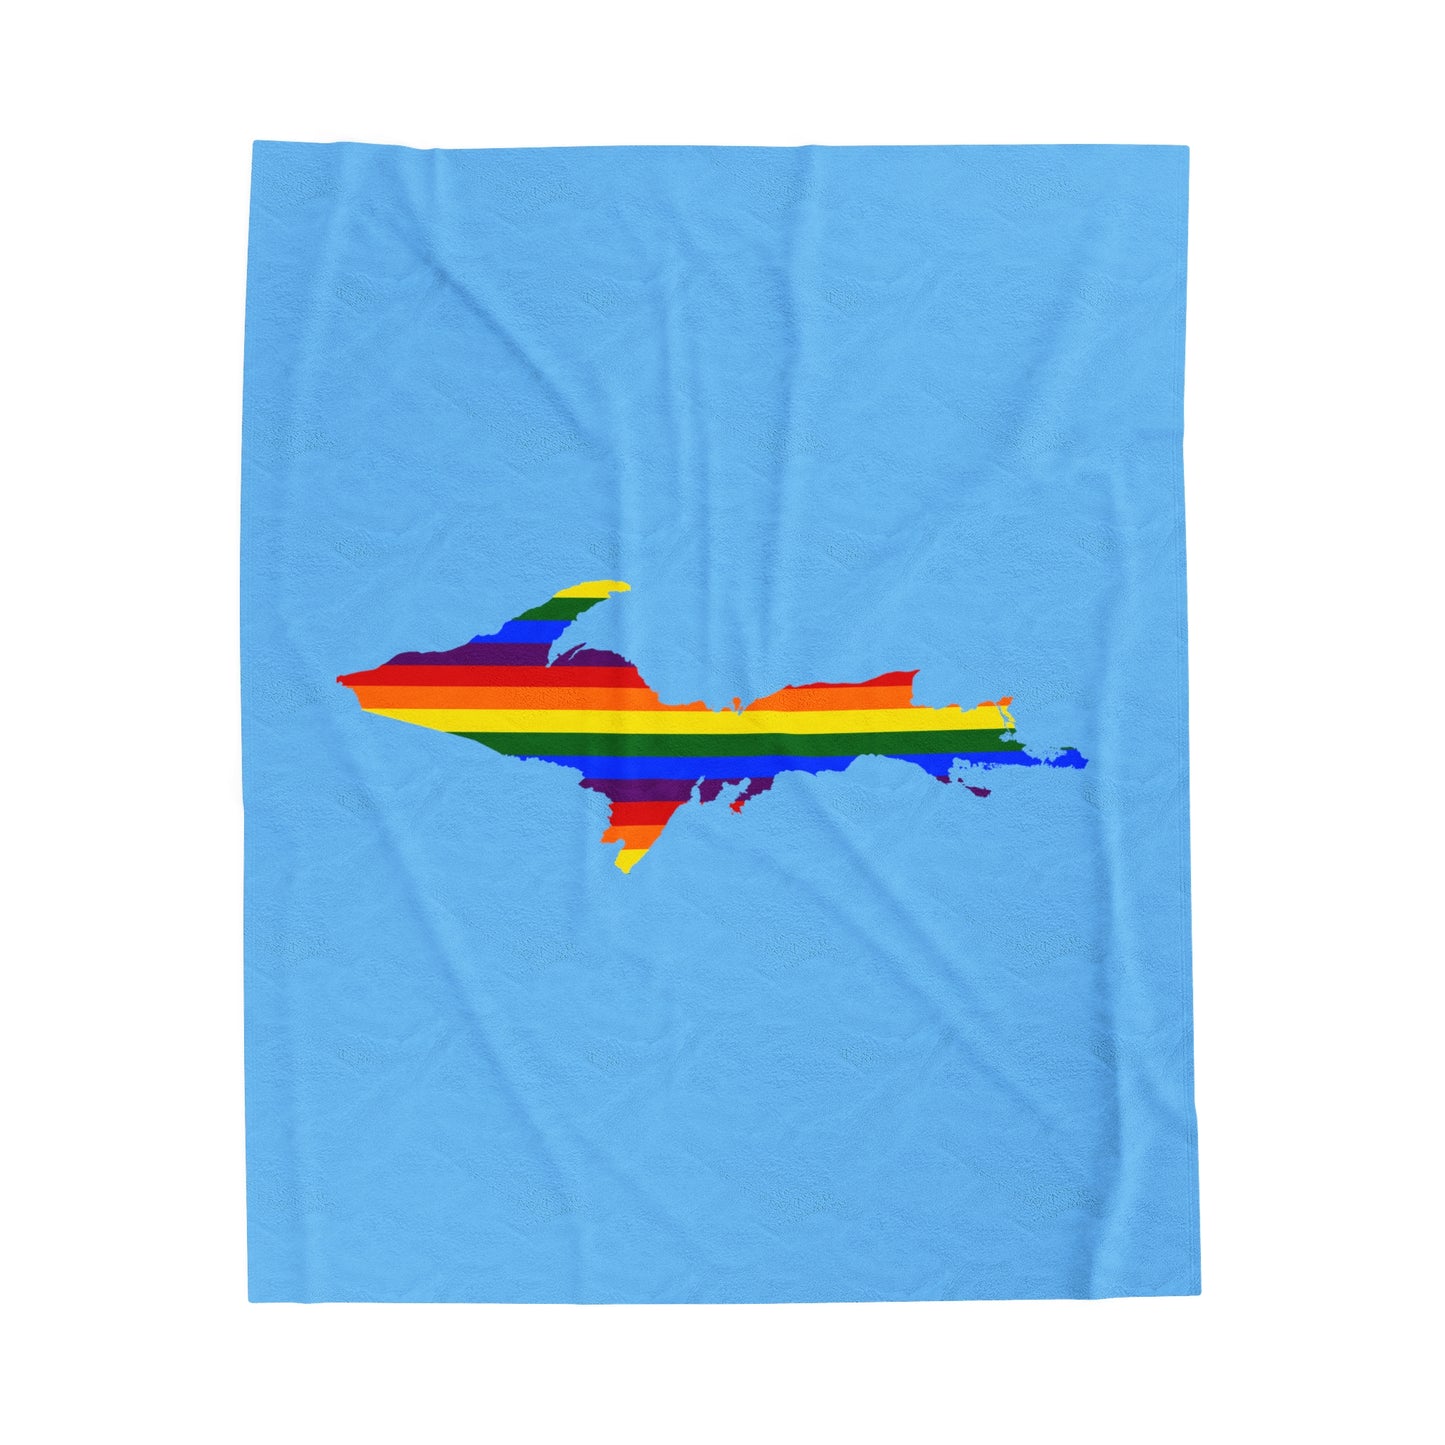 Michigan Upper Peninsula Plush Blanket (w/ UP Pride Flag Outline) | DTW Blue